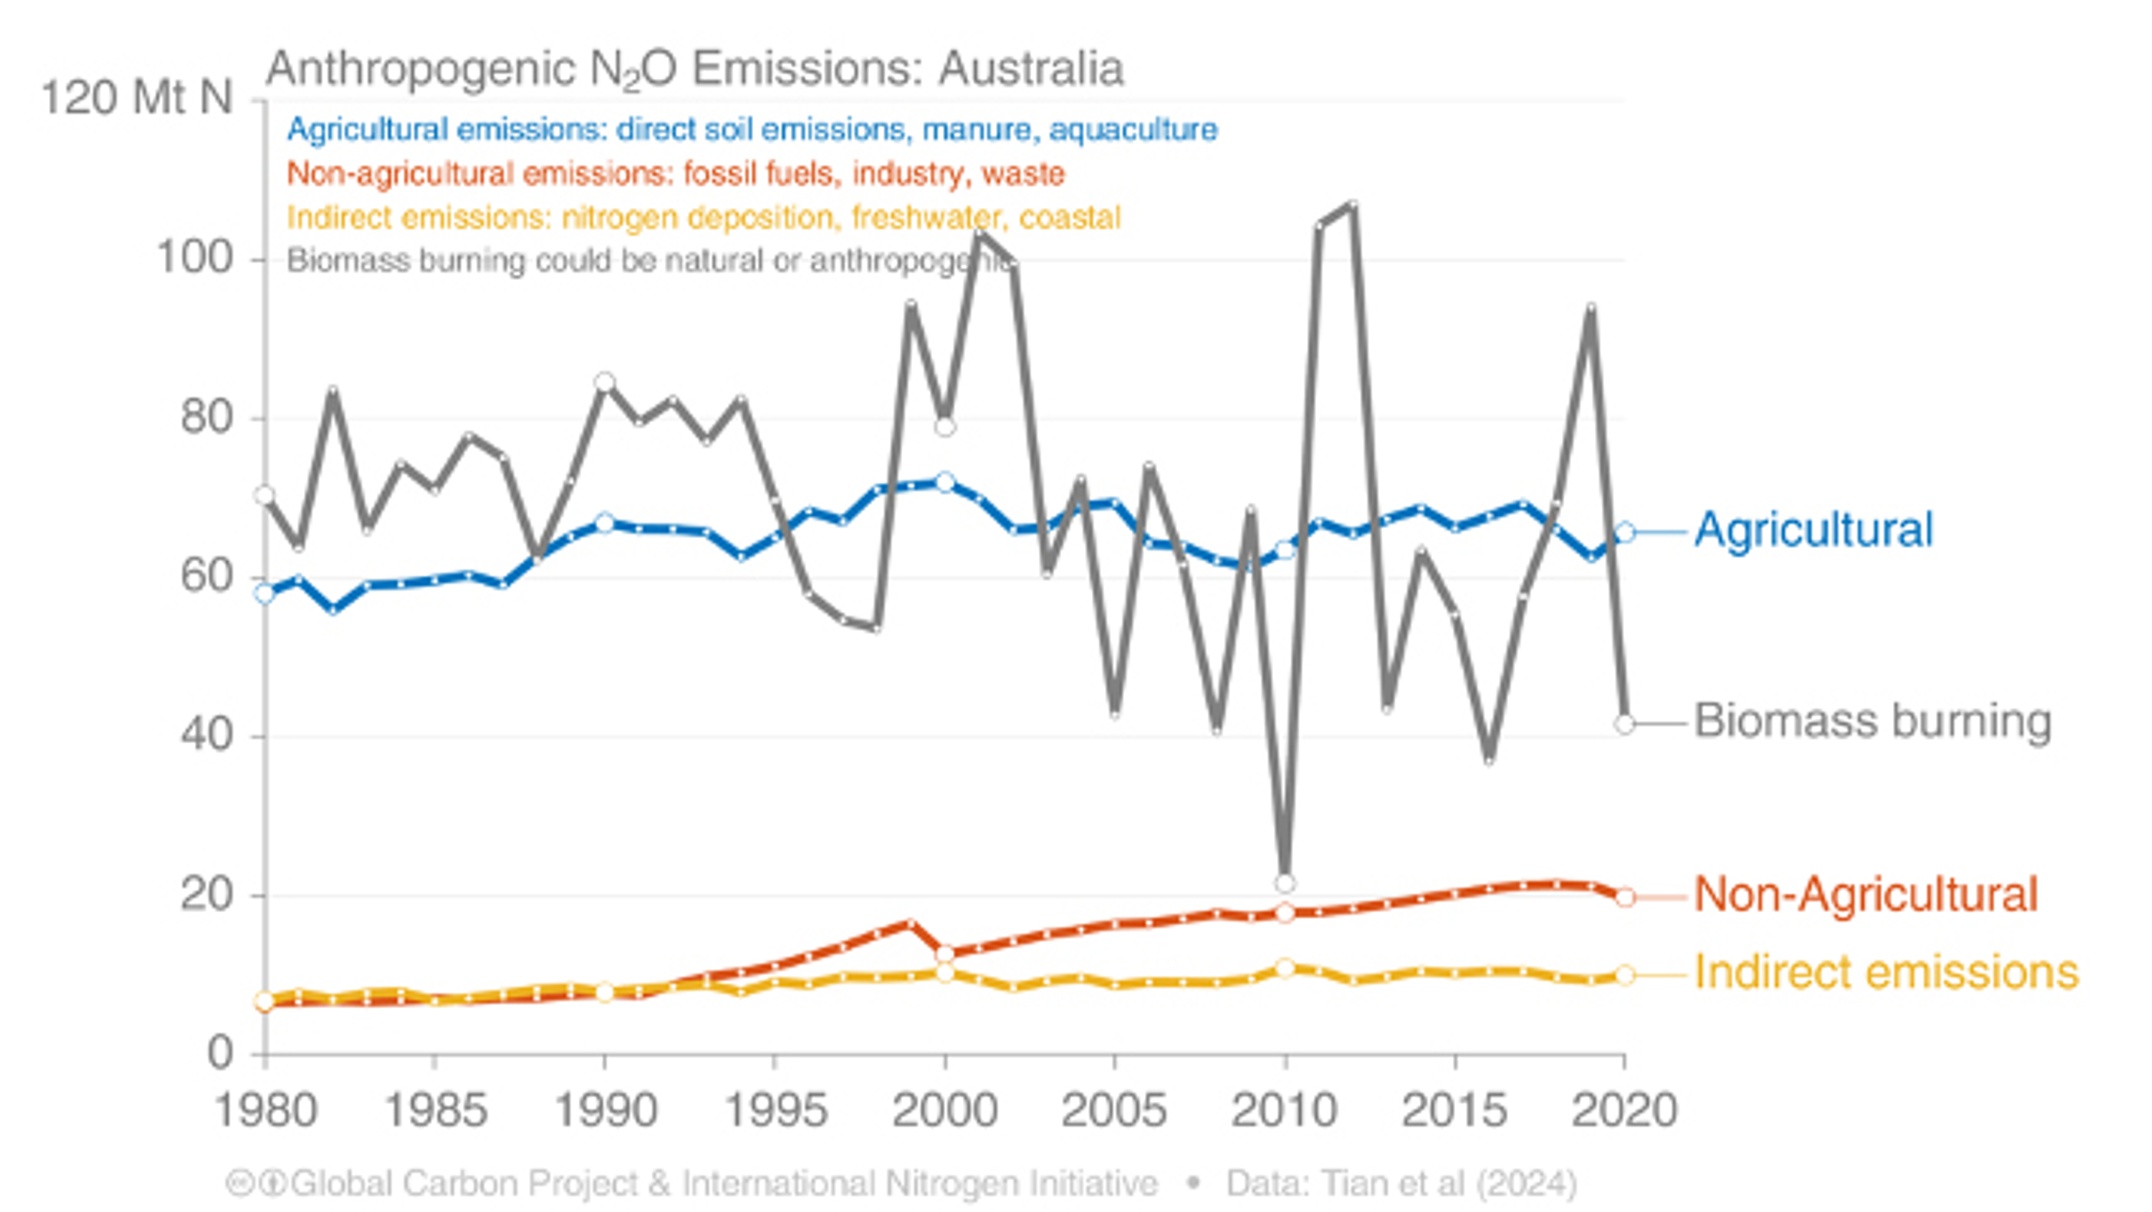 Australia's anthropogenic N2O emissions